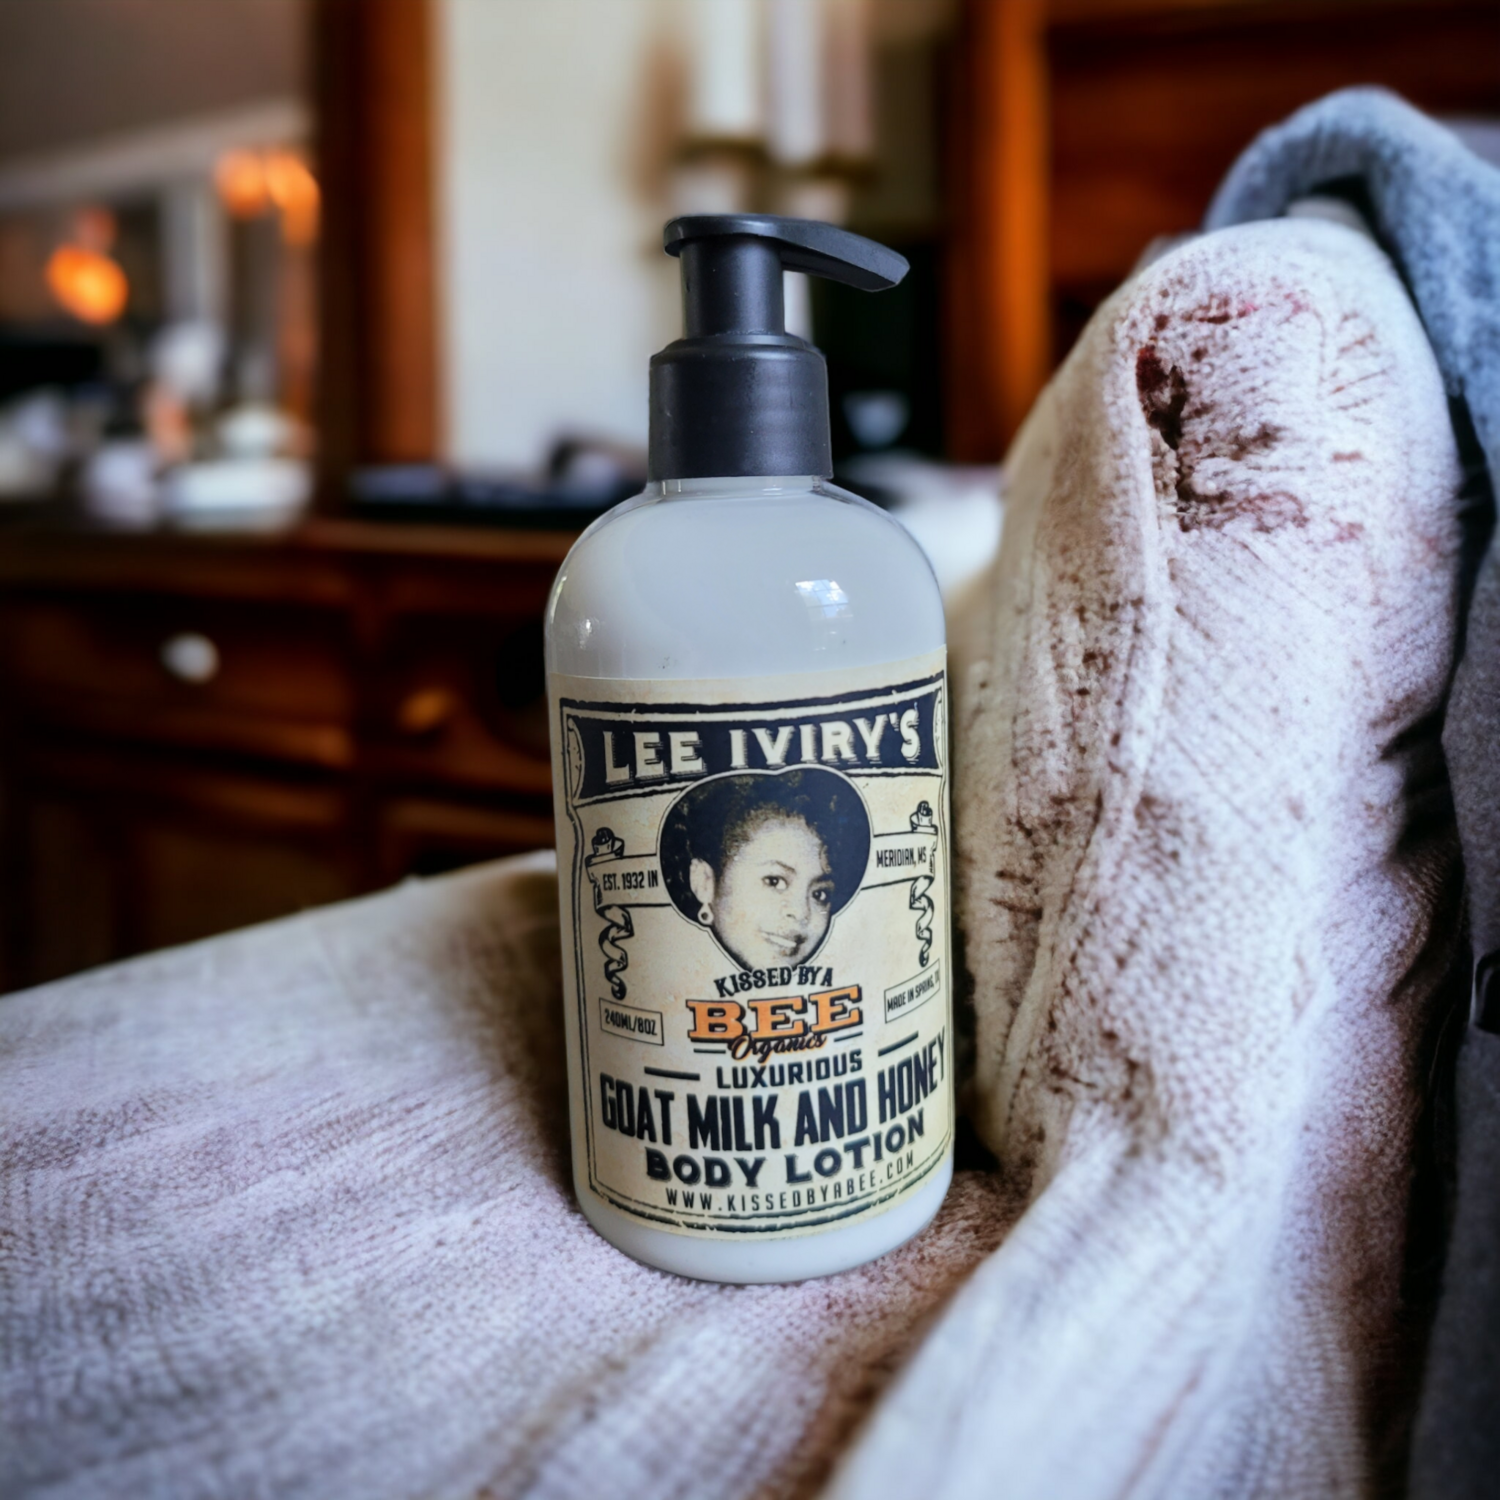 Lee Iviry's Luxurious Goat Milk & Honey Body Lotion